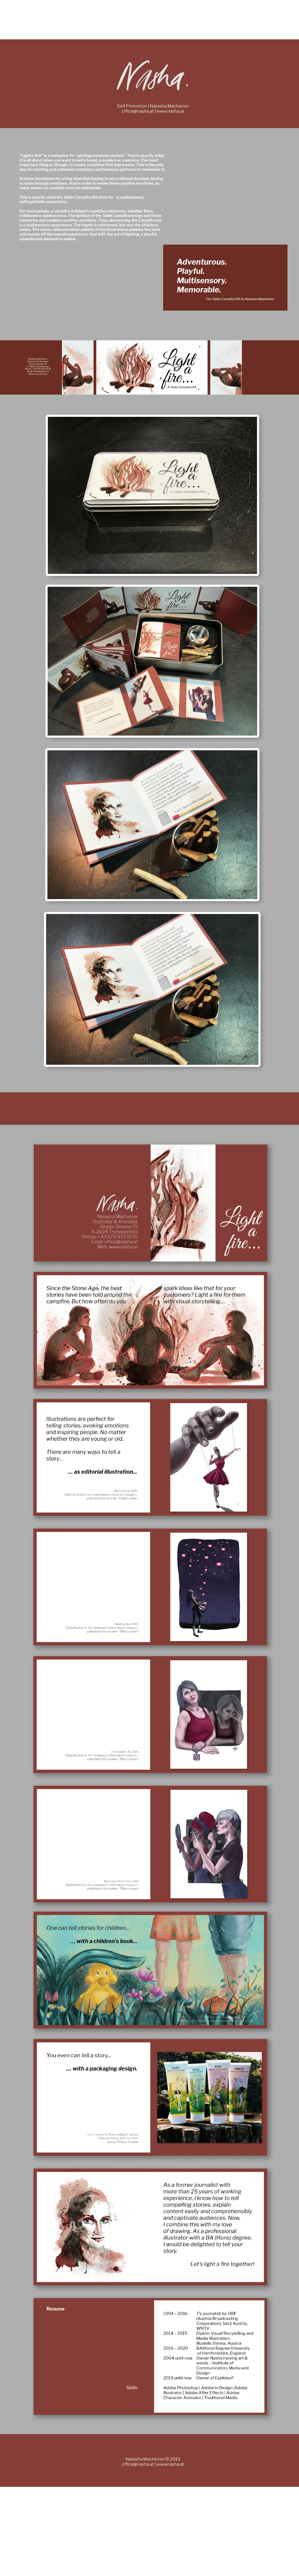 Self Promotion self-promotion ink fire table fire Campfire ILLUSTRATION  digital illustration Packaging packaging design